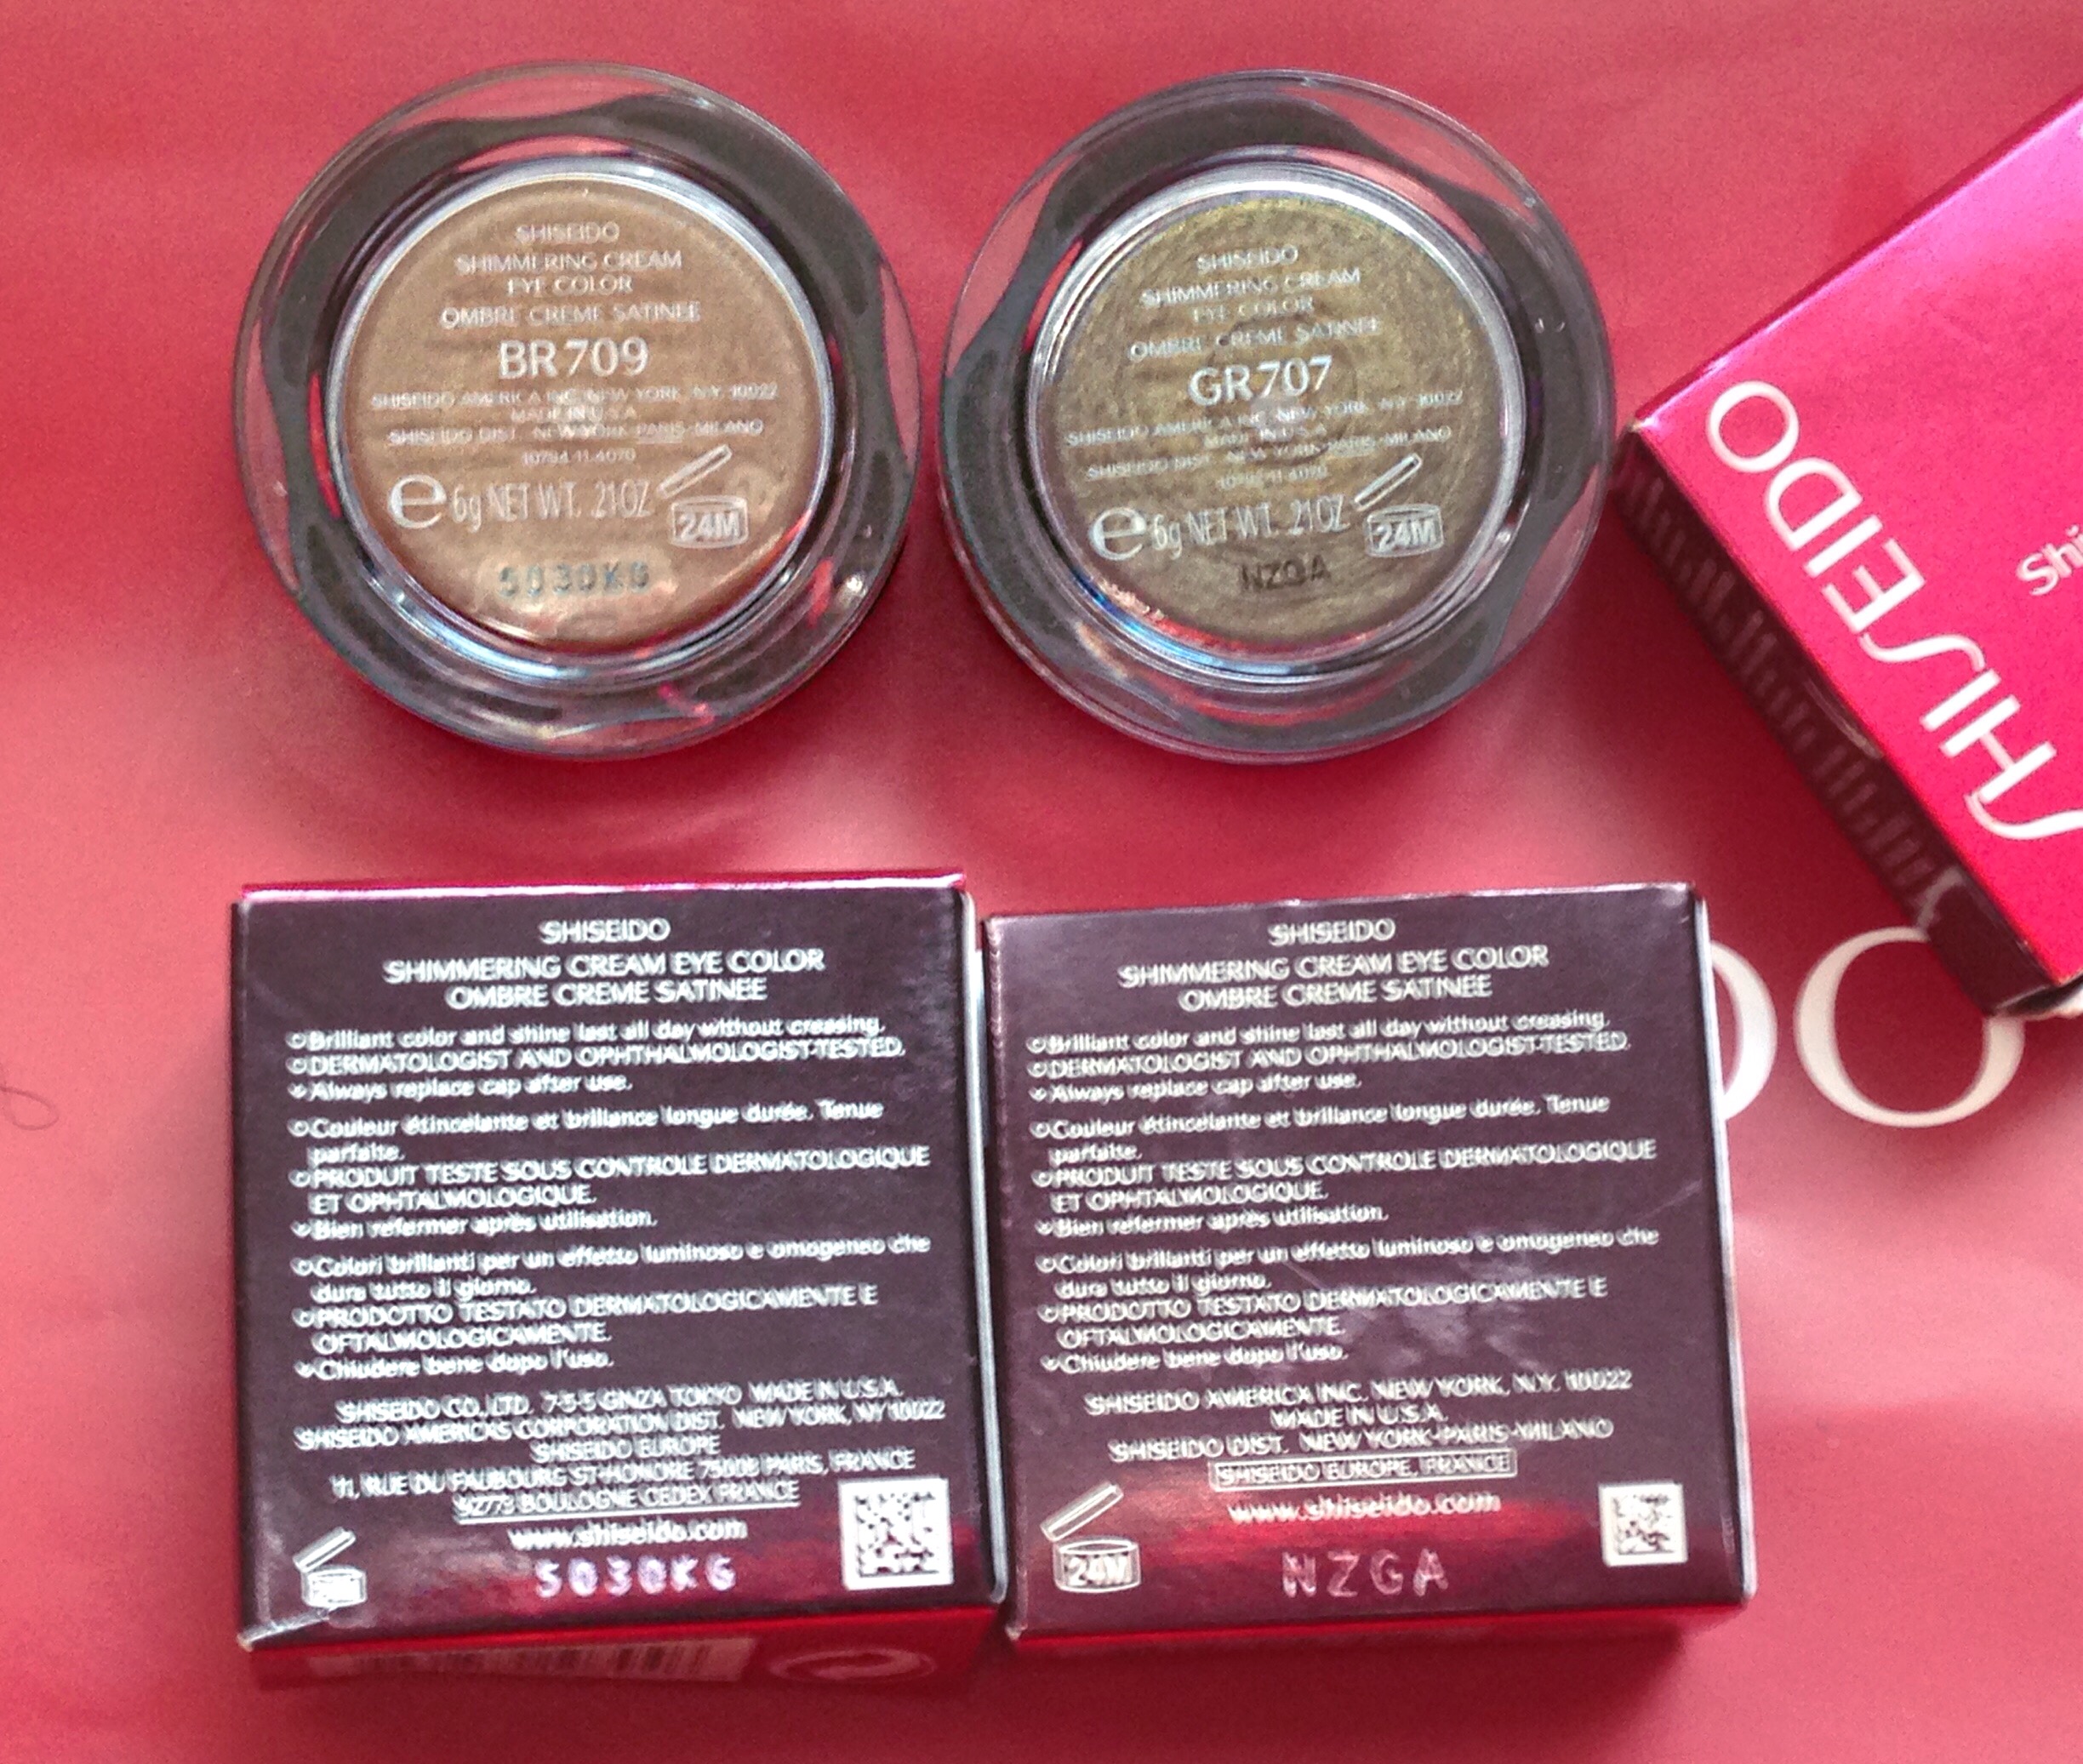 Kiks lytter Komprimere Shiseido Shimmering Eye Cream shadows review